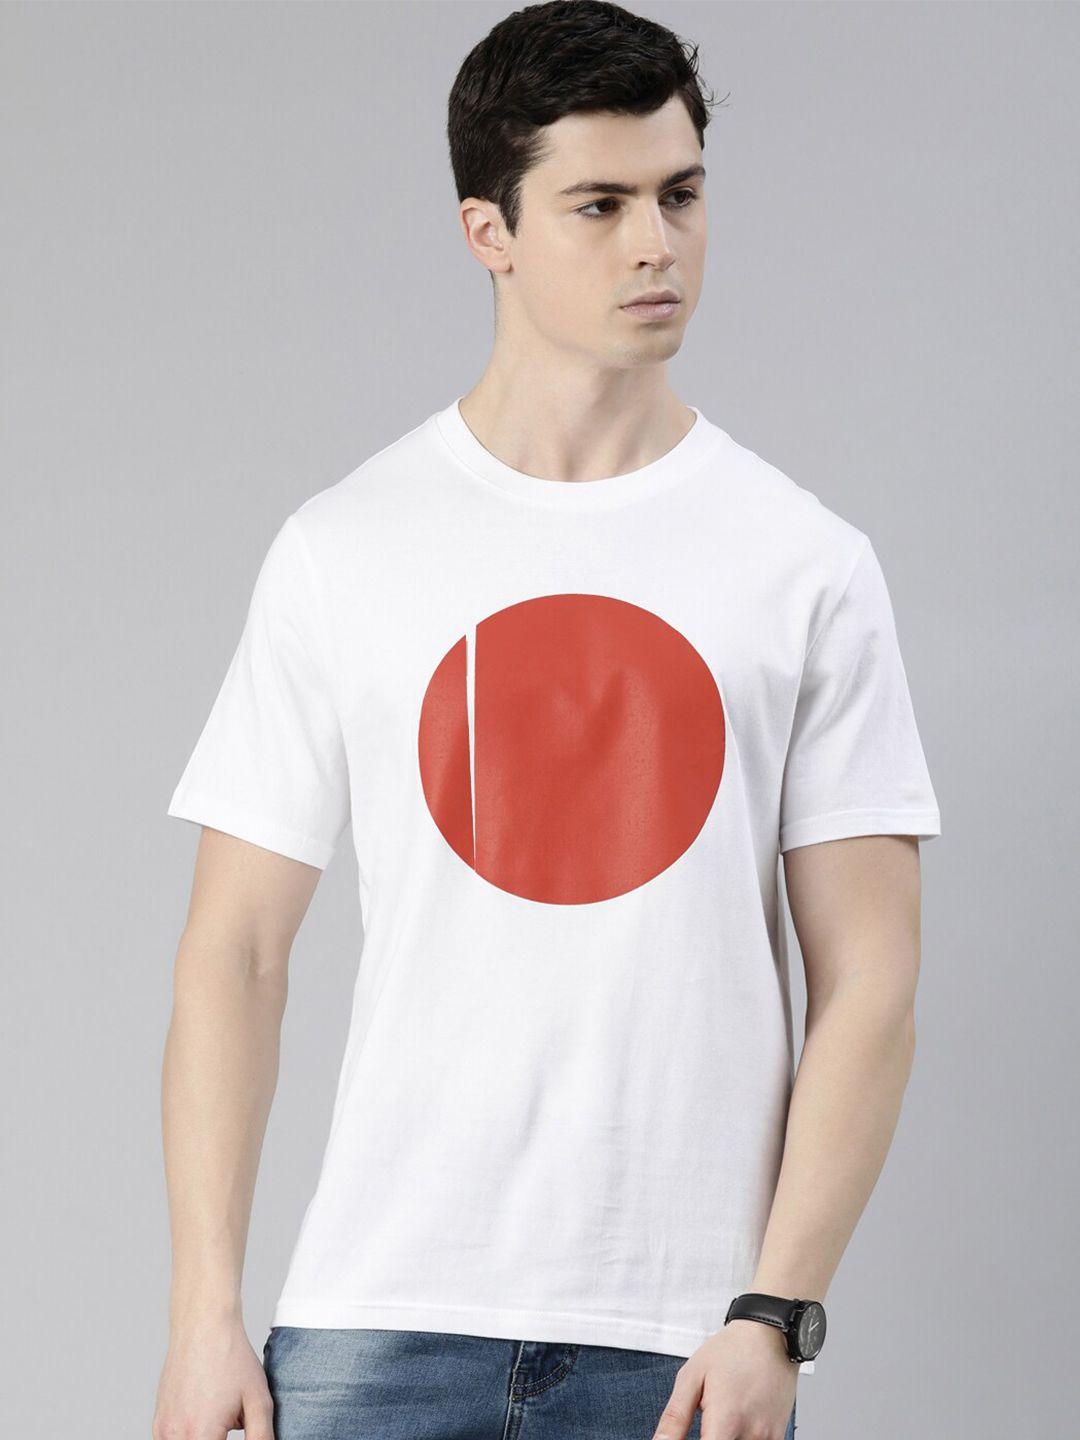 recast geometric printed pure cotton bio finish t-shirt